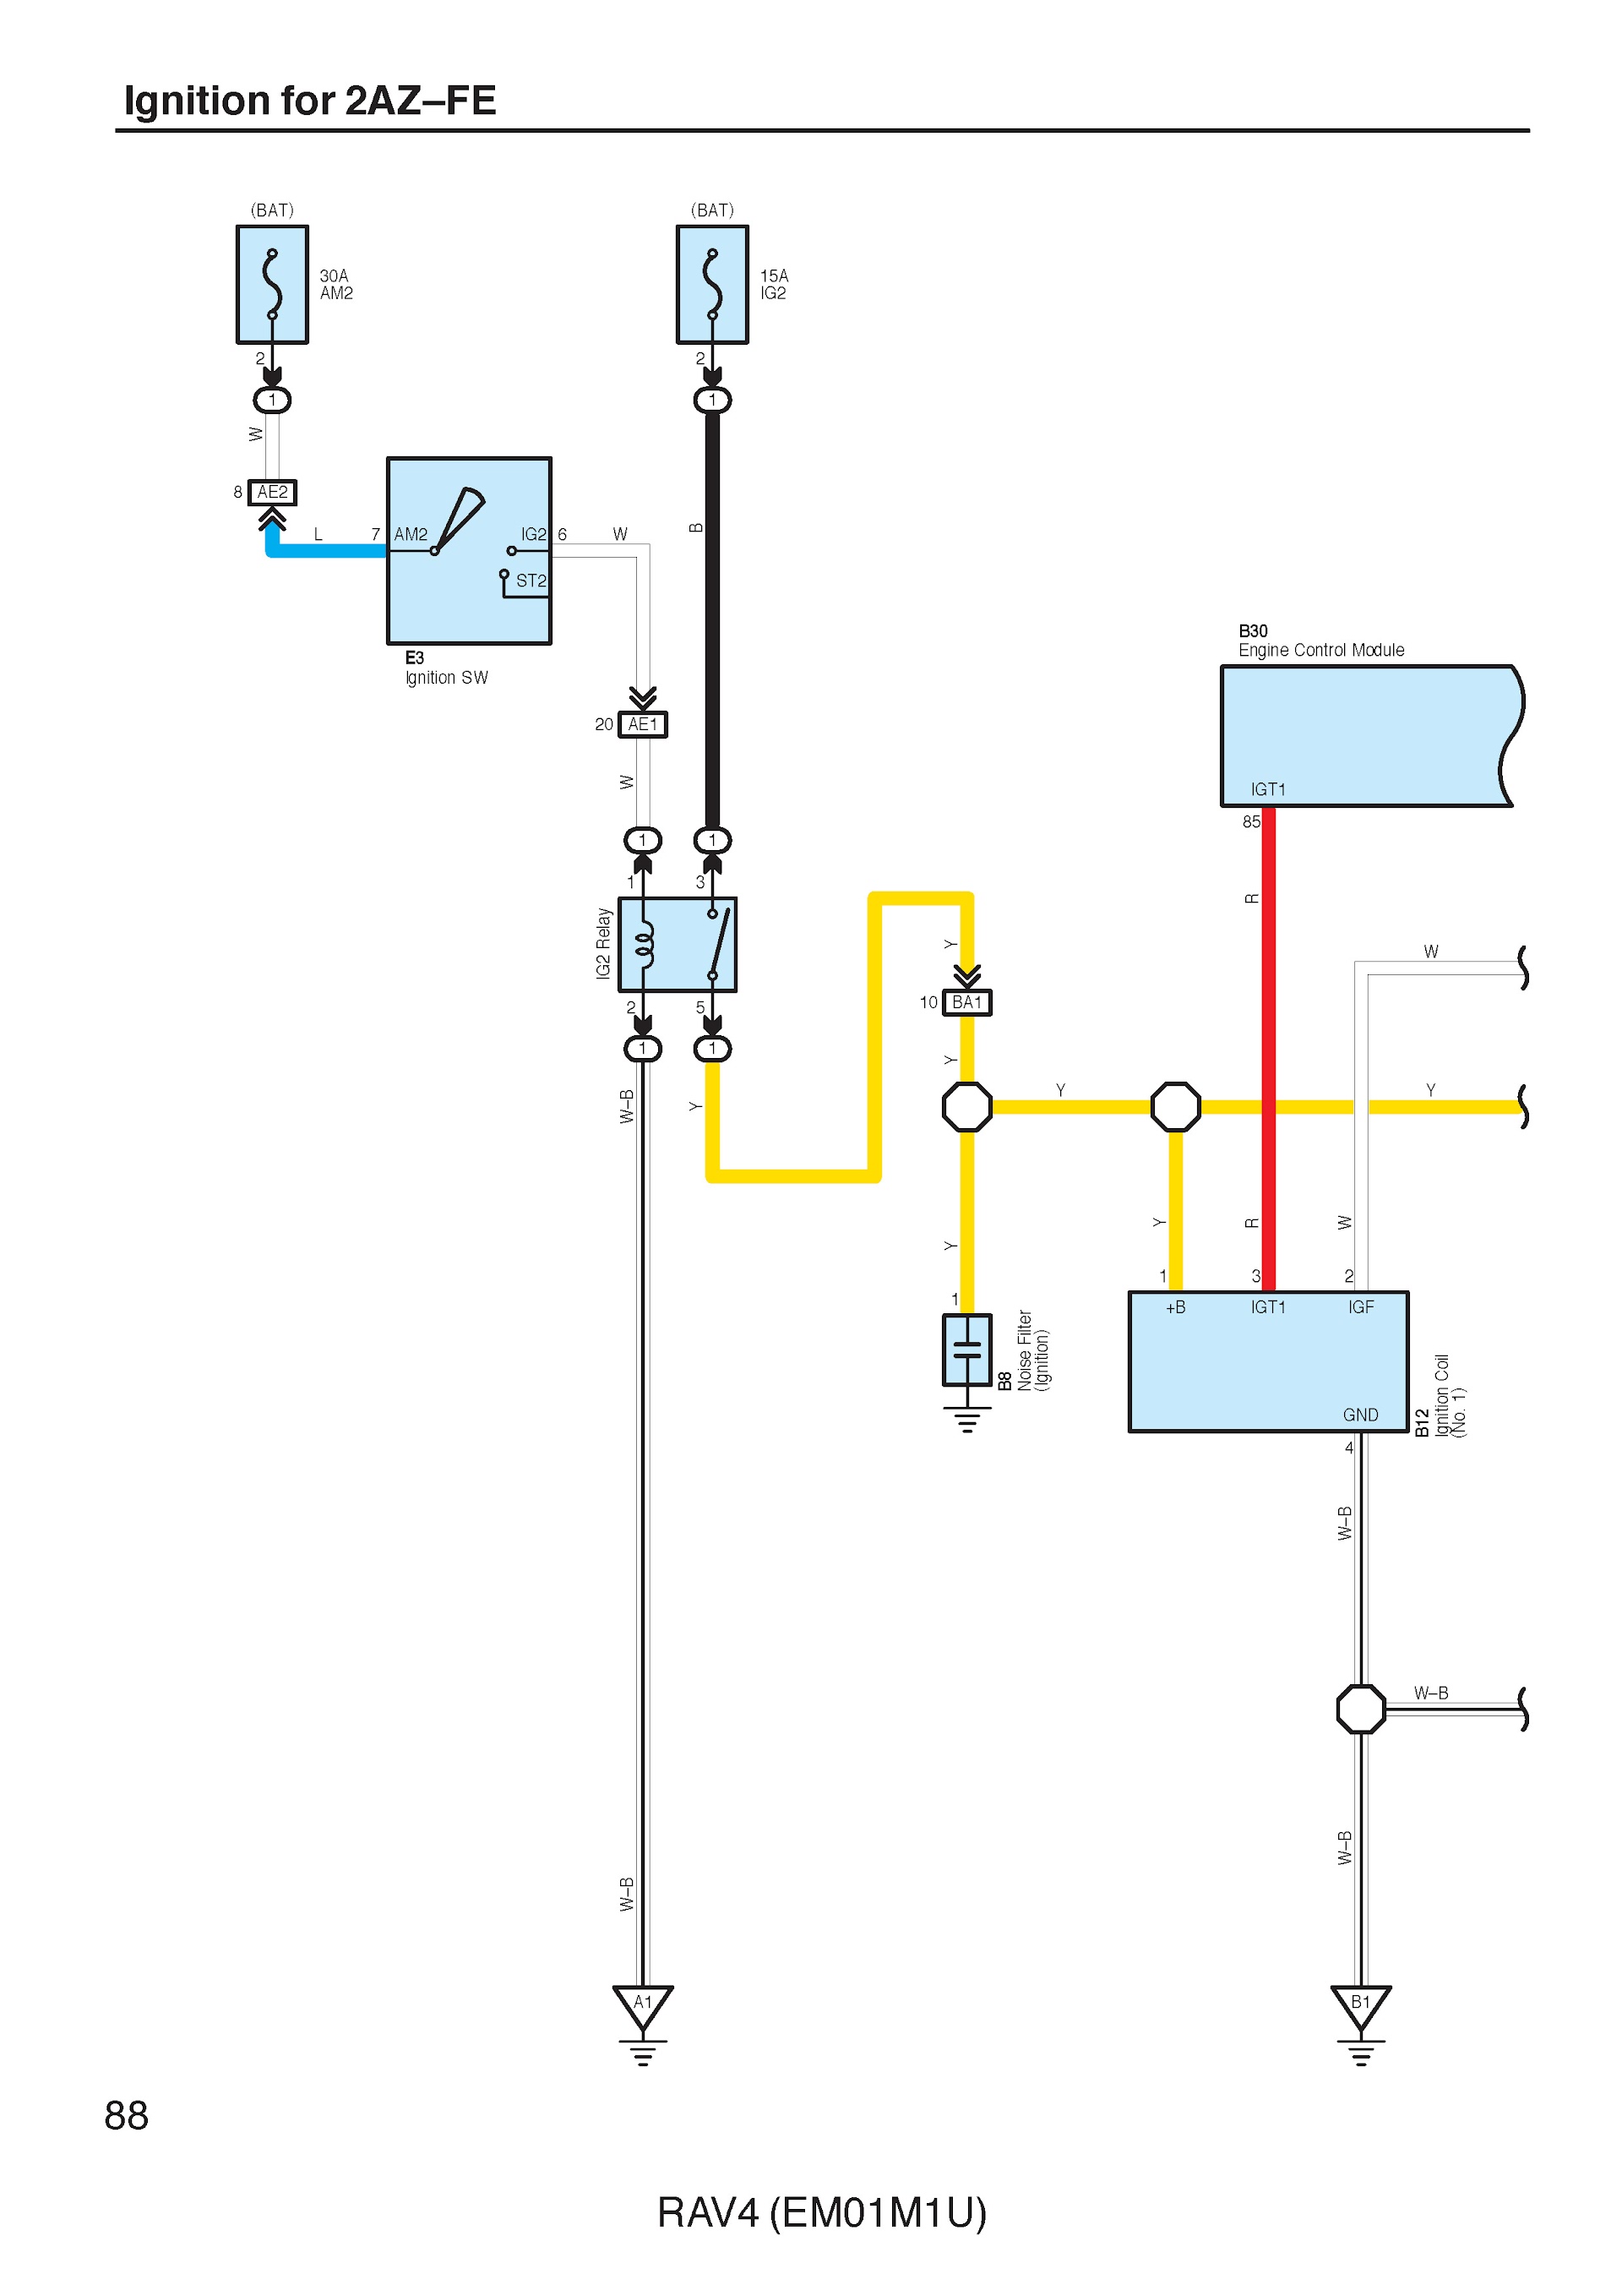 2006 Toyota RAV4 Repair Manual, Wiring Diagram, Ignition for 2AZ-FE